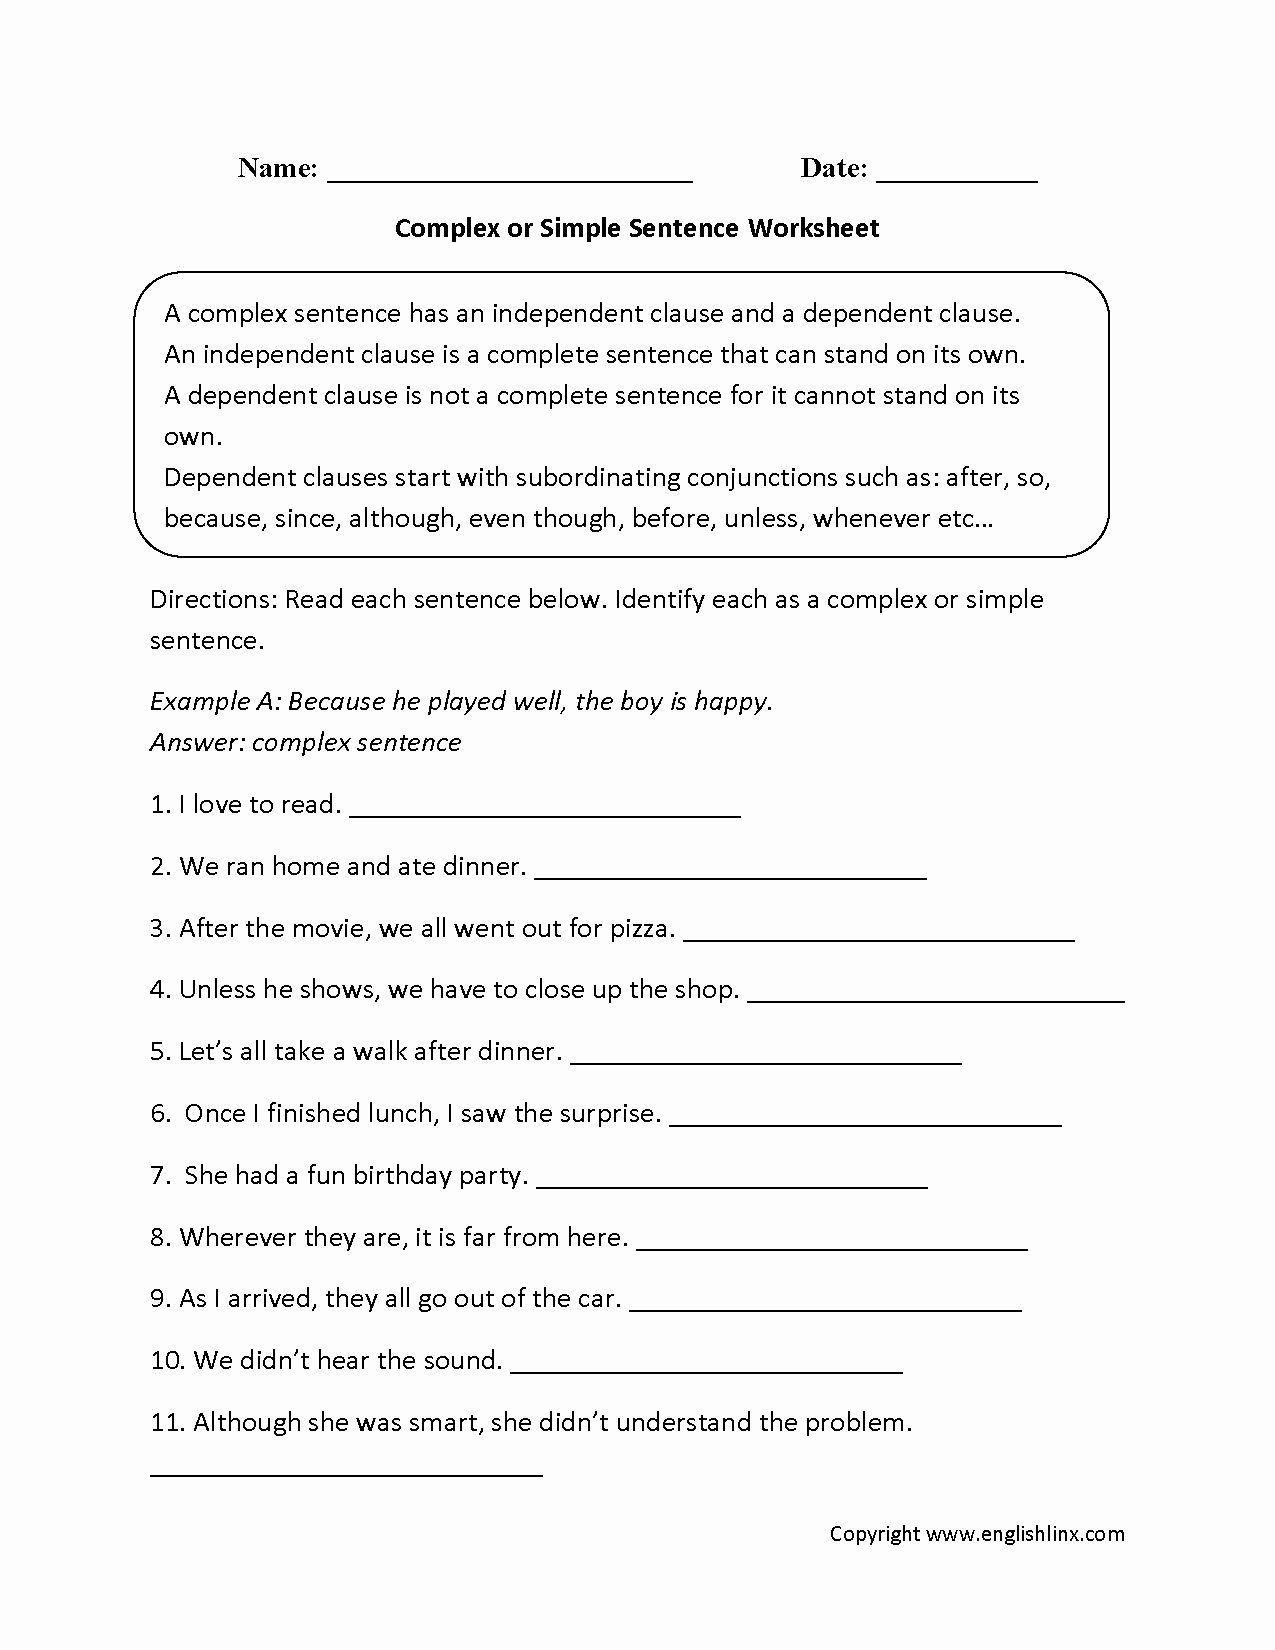 Complex Sentence Worksheets 3rd Grade Elegant 4 Worksheet Free Grammar Worksheets Third Grade 3